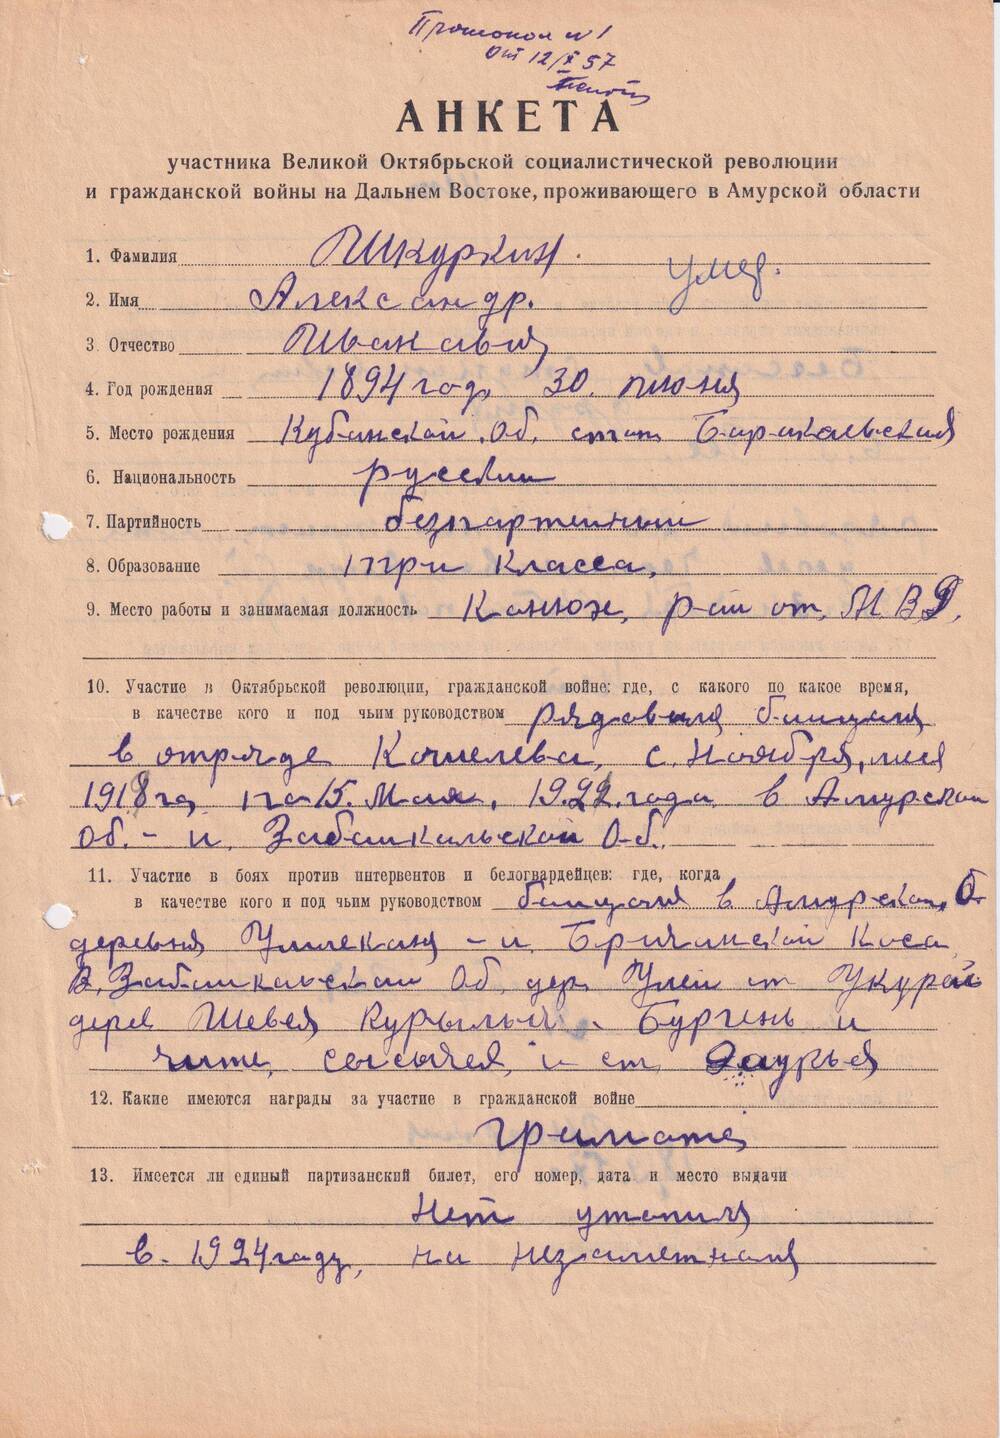 Анкета Шкуркина Александра Ивановича, партизана из отряда Ф.И. Кошелева с 1919 по 1921 гг.